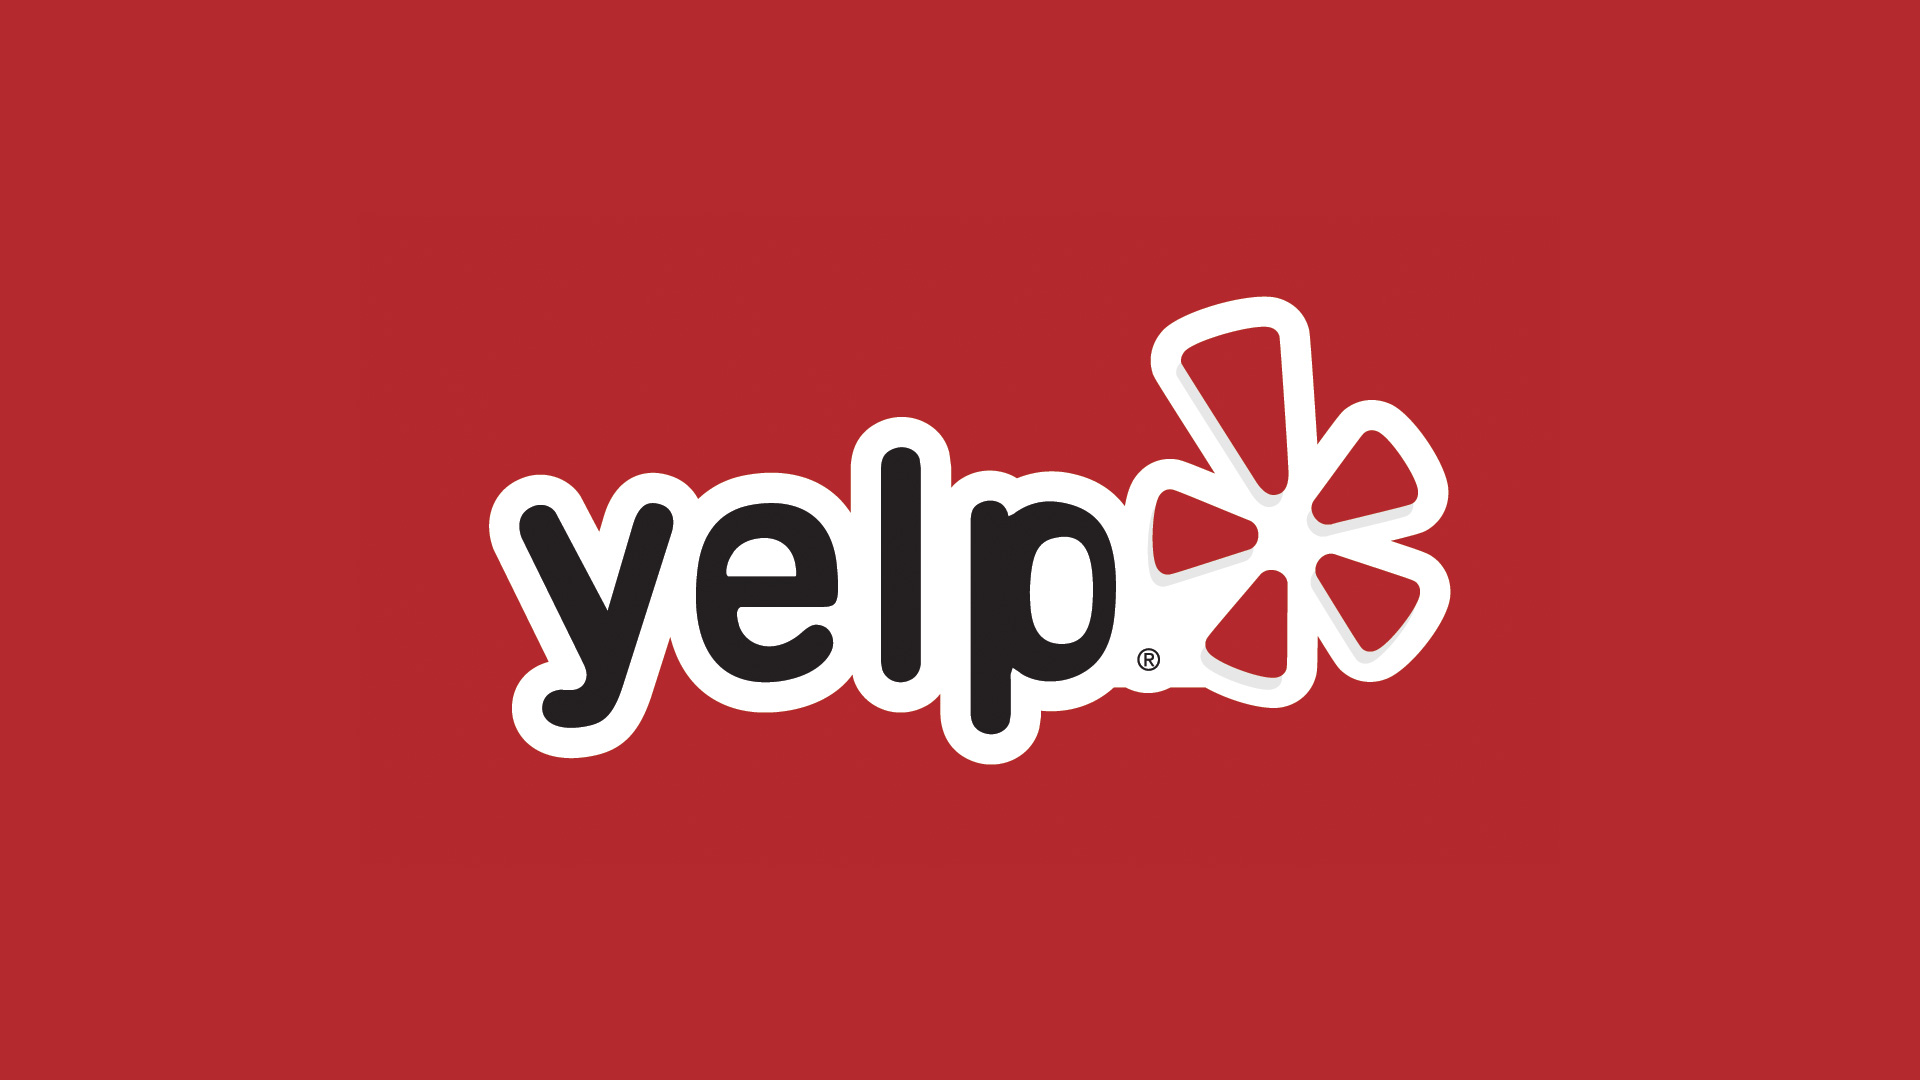 Yelp announces expanding Yelp Knowledge social analytics program